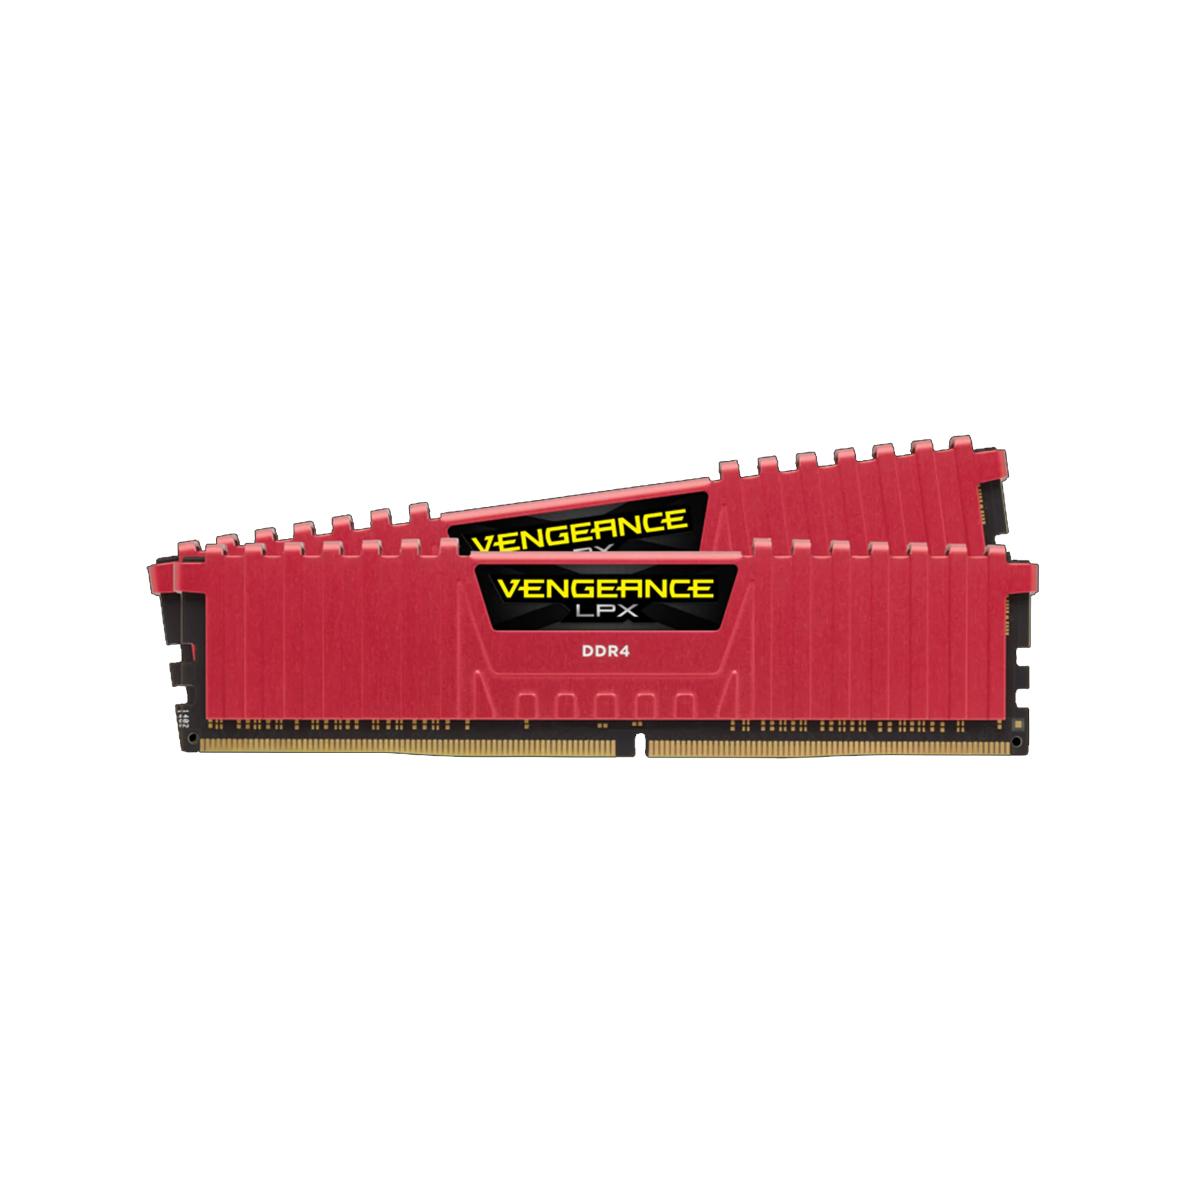 MEMORIA DIMM DDR4 CORSAIR (CMK16GX4M2A2666C16R) 16GB 2666MHZ (2X8GB) VENGEANCE LPX, ROJO - CORSAIR